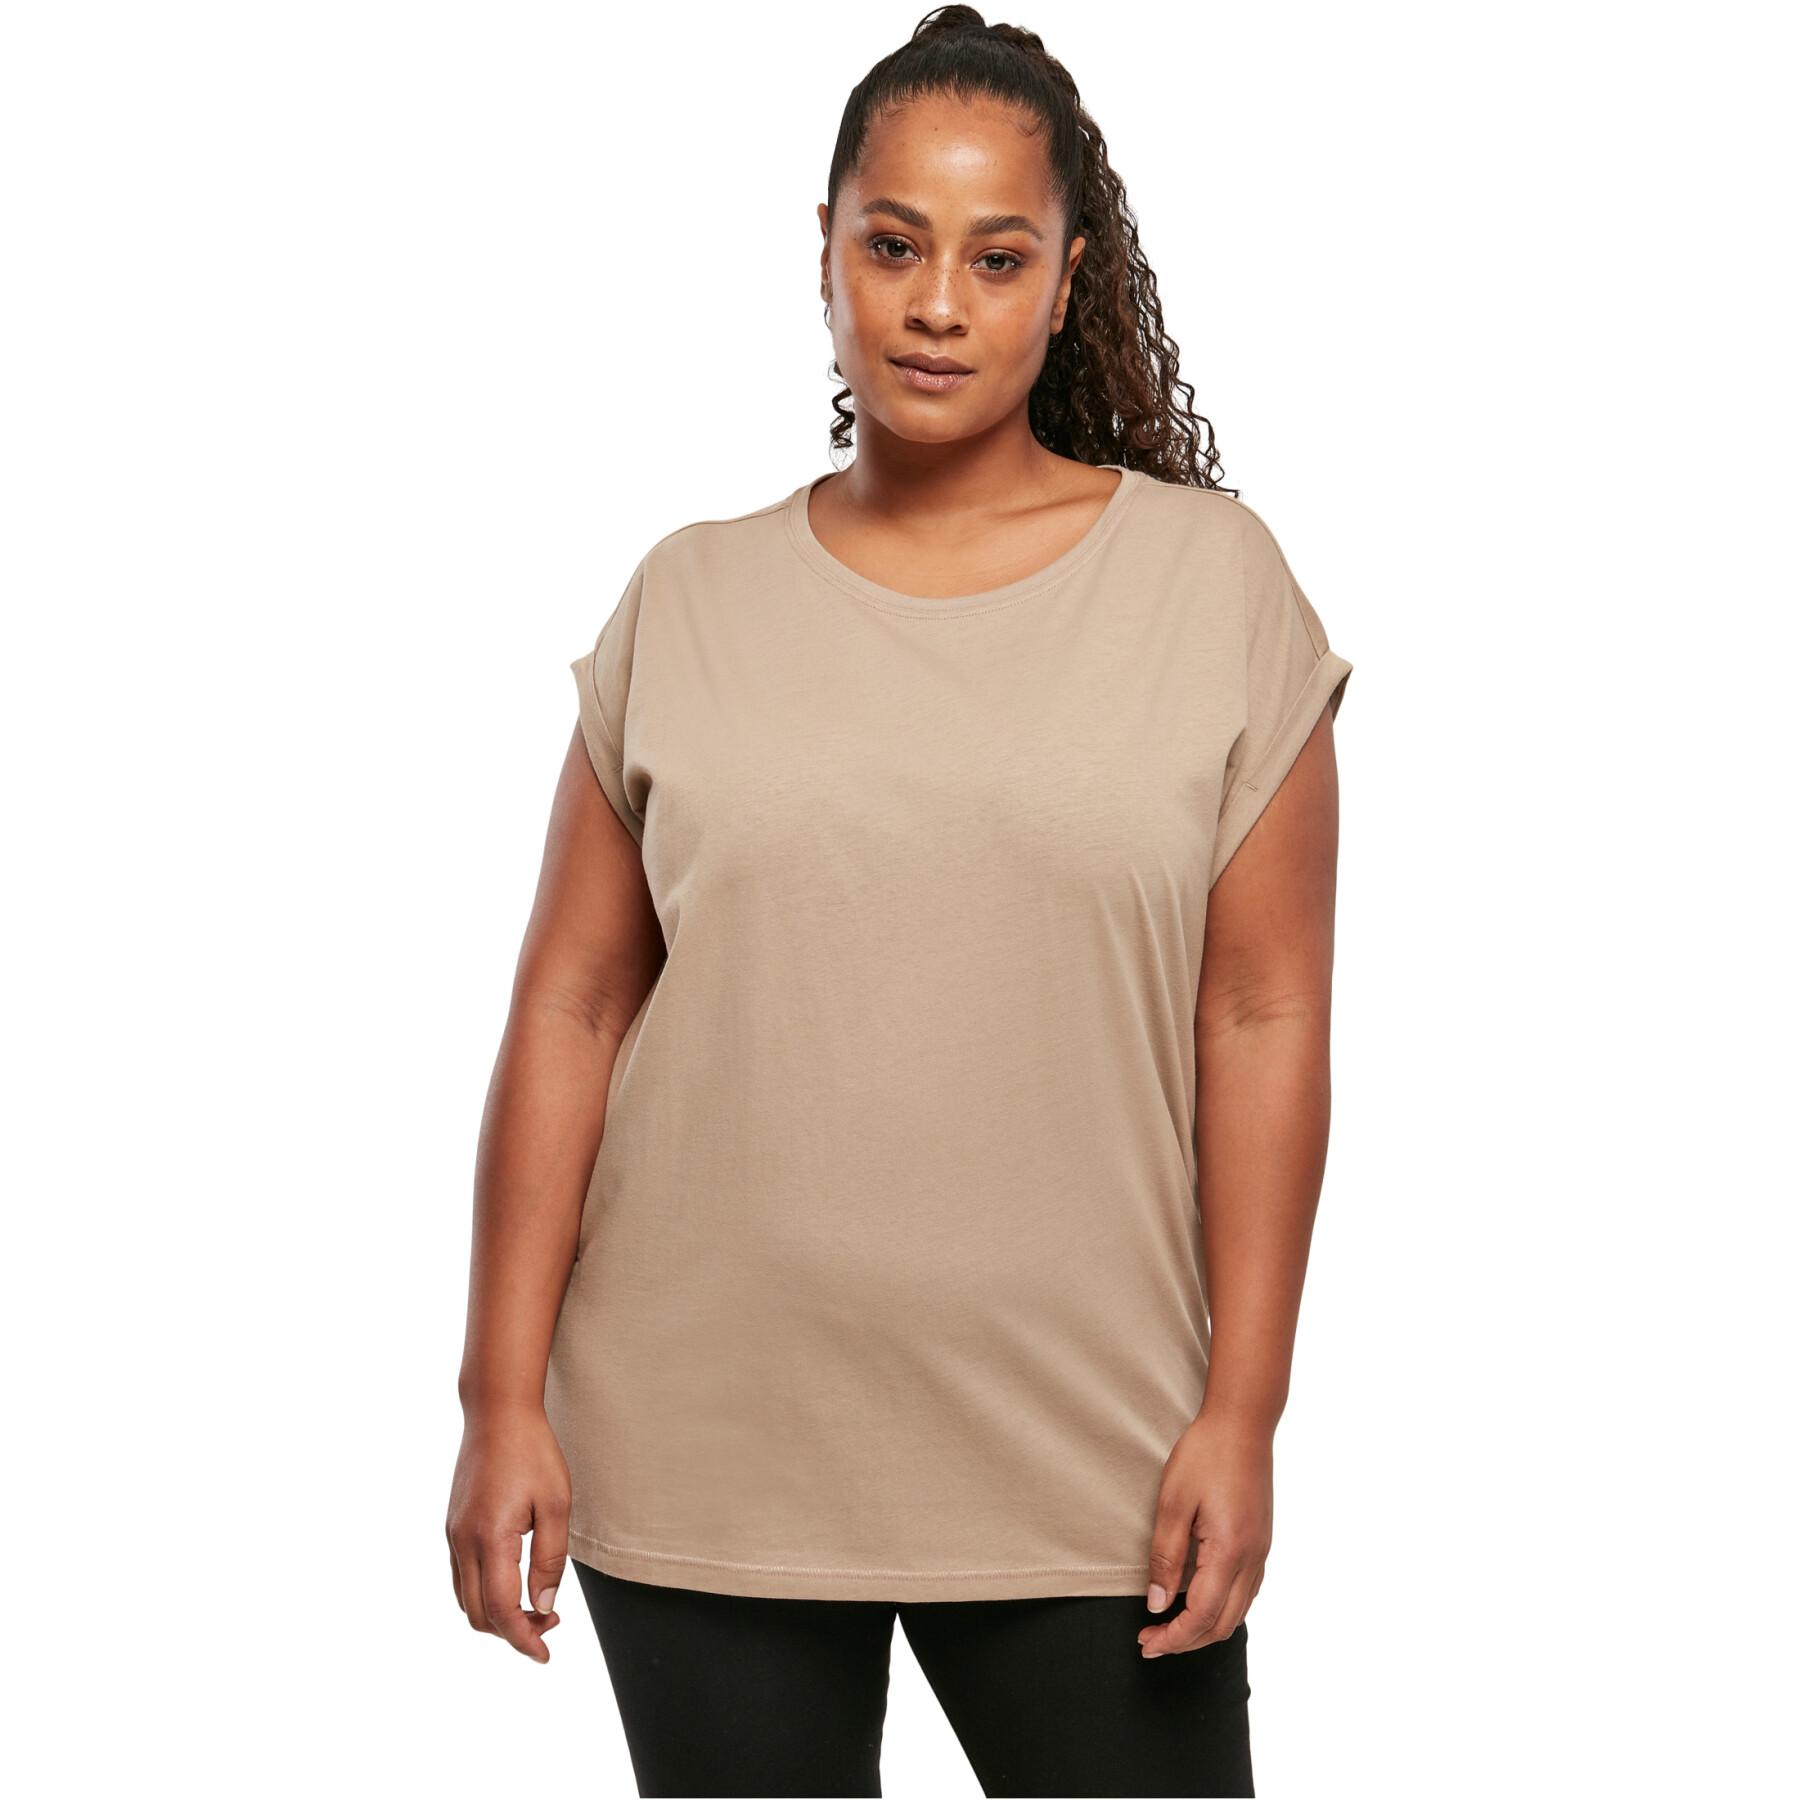 T-shirt femme Urban Classics Extended Shoulder